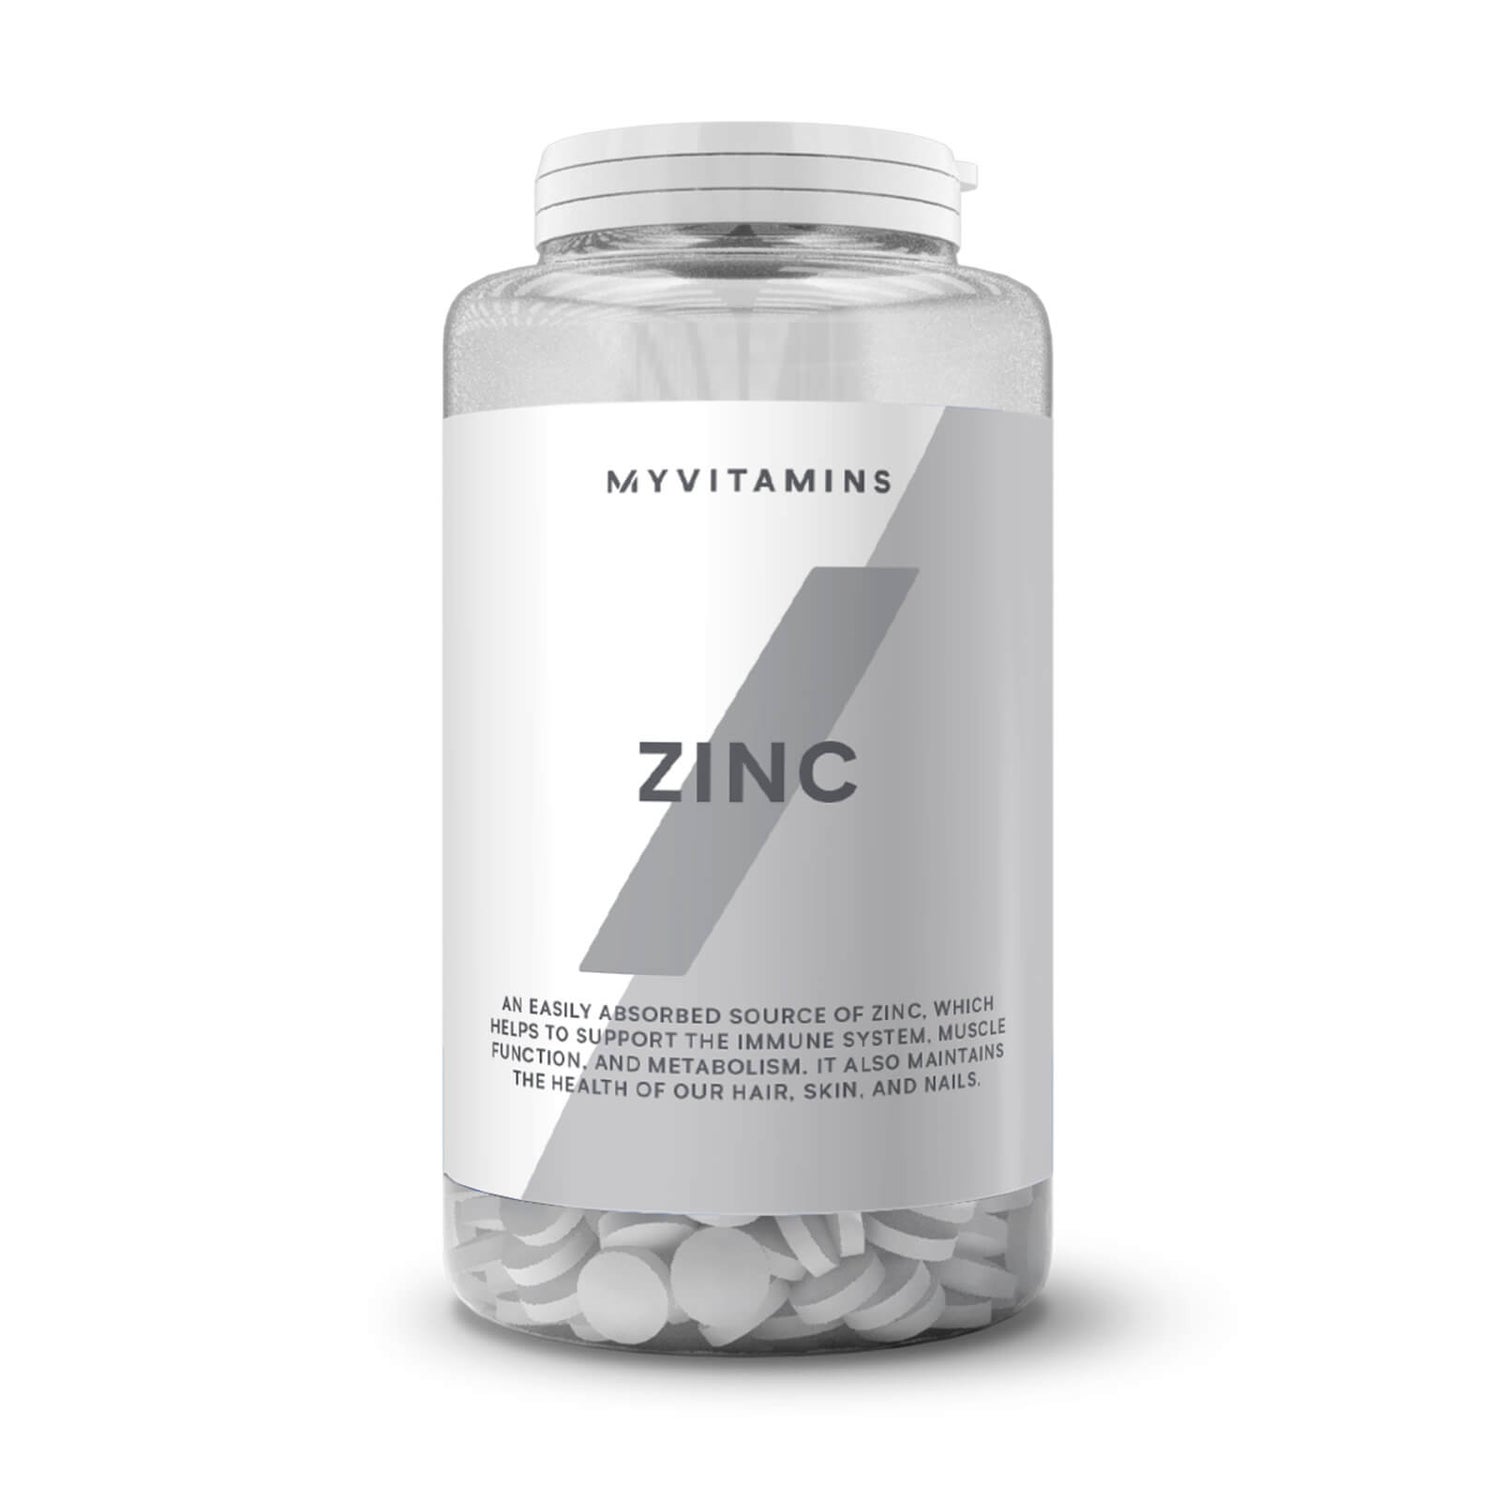 Myvitamins Zinc